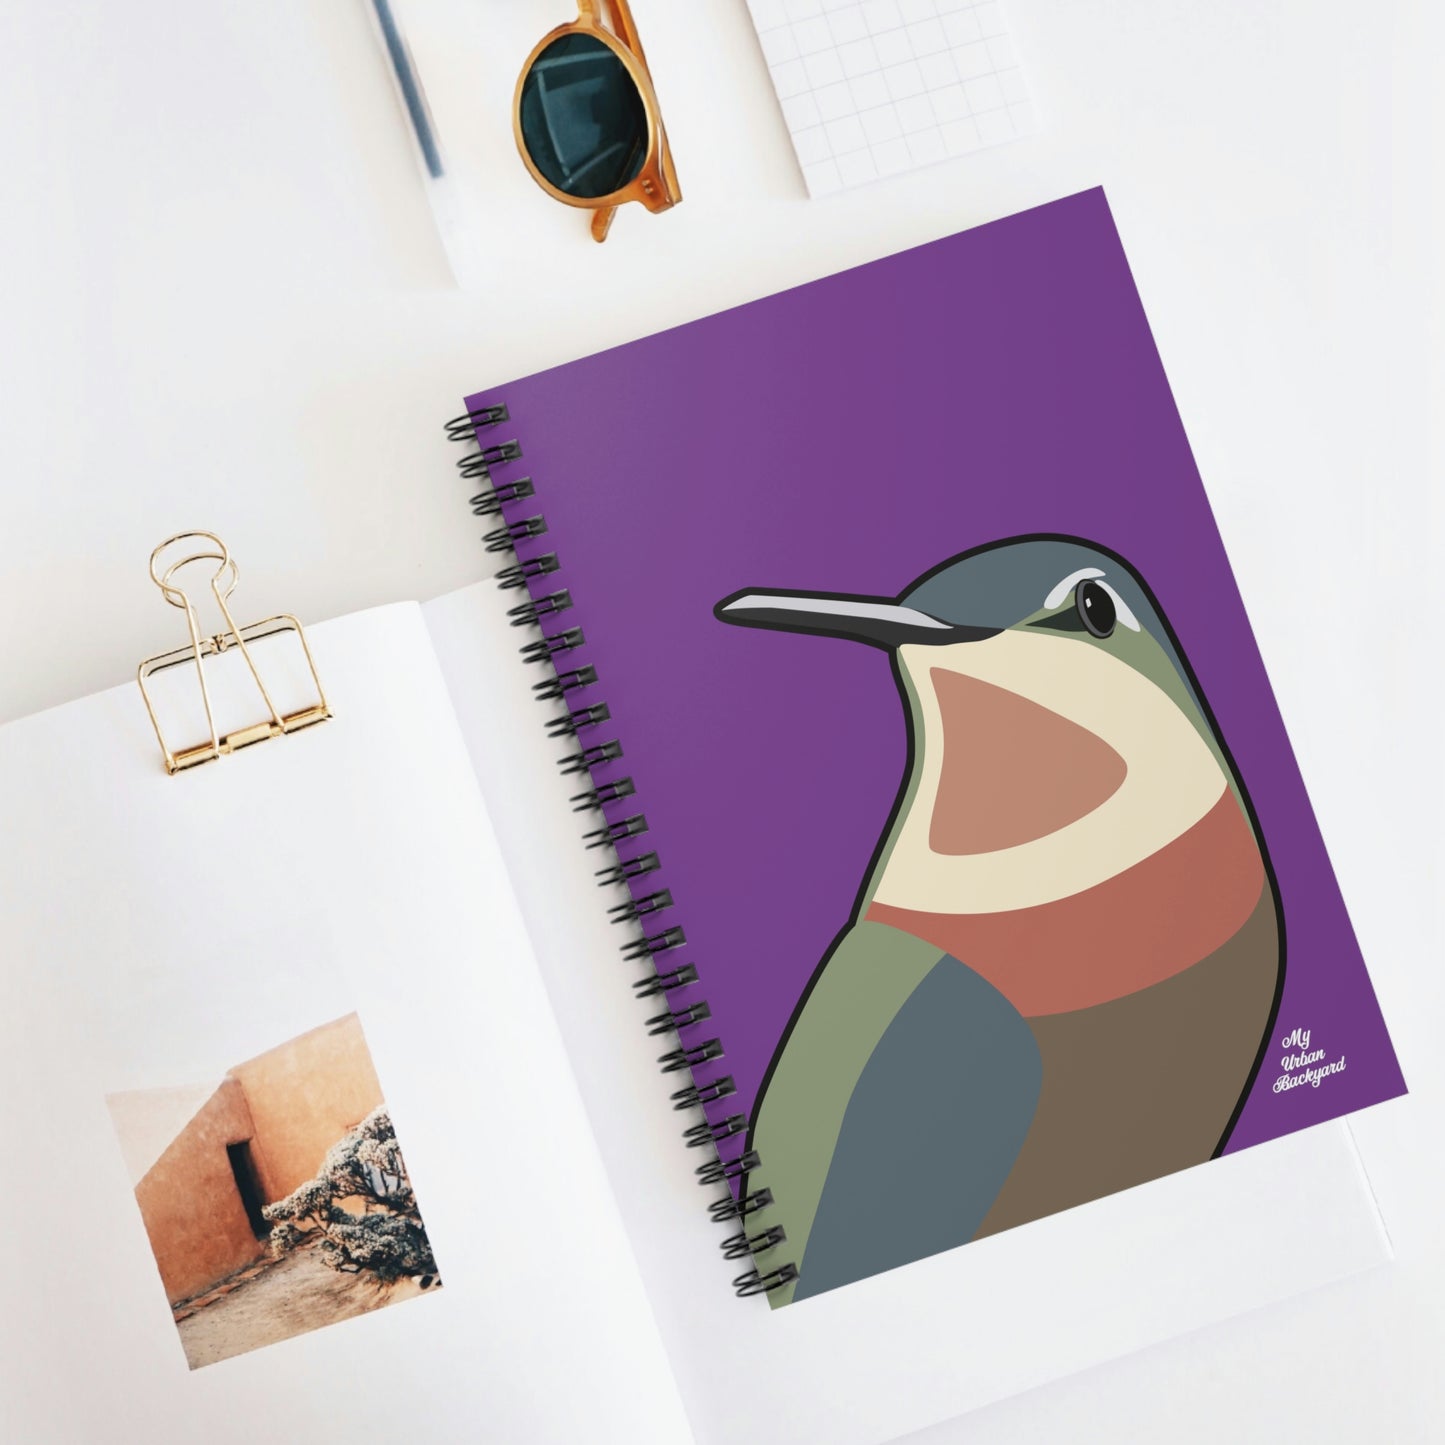 Hummingbird on Wildflower Purple, Spiral Notebook Journal - Write in Style